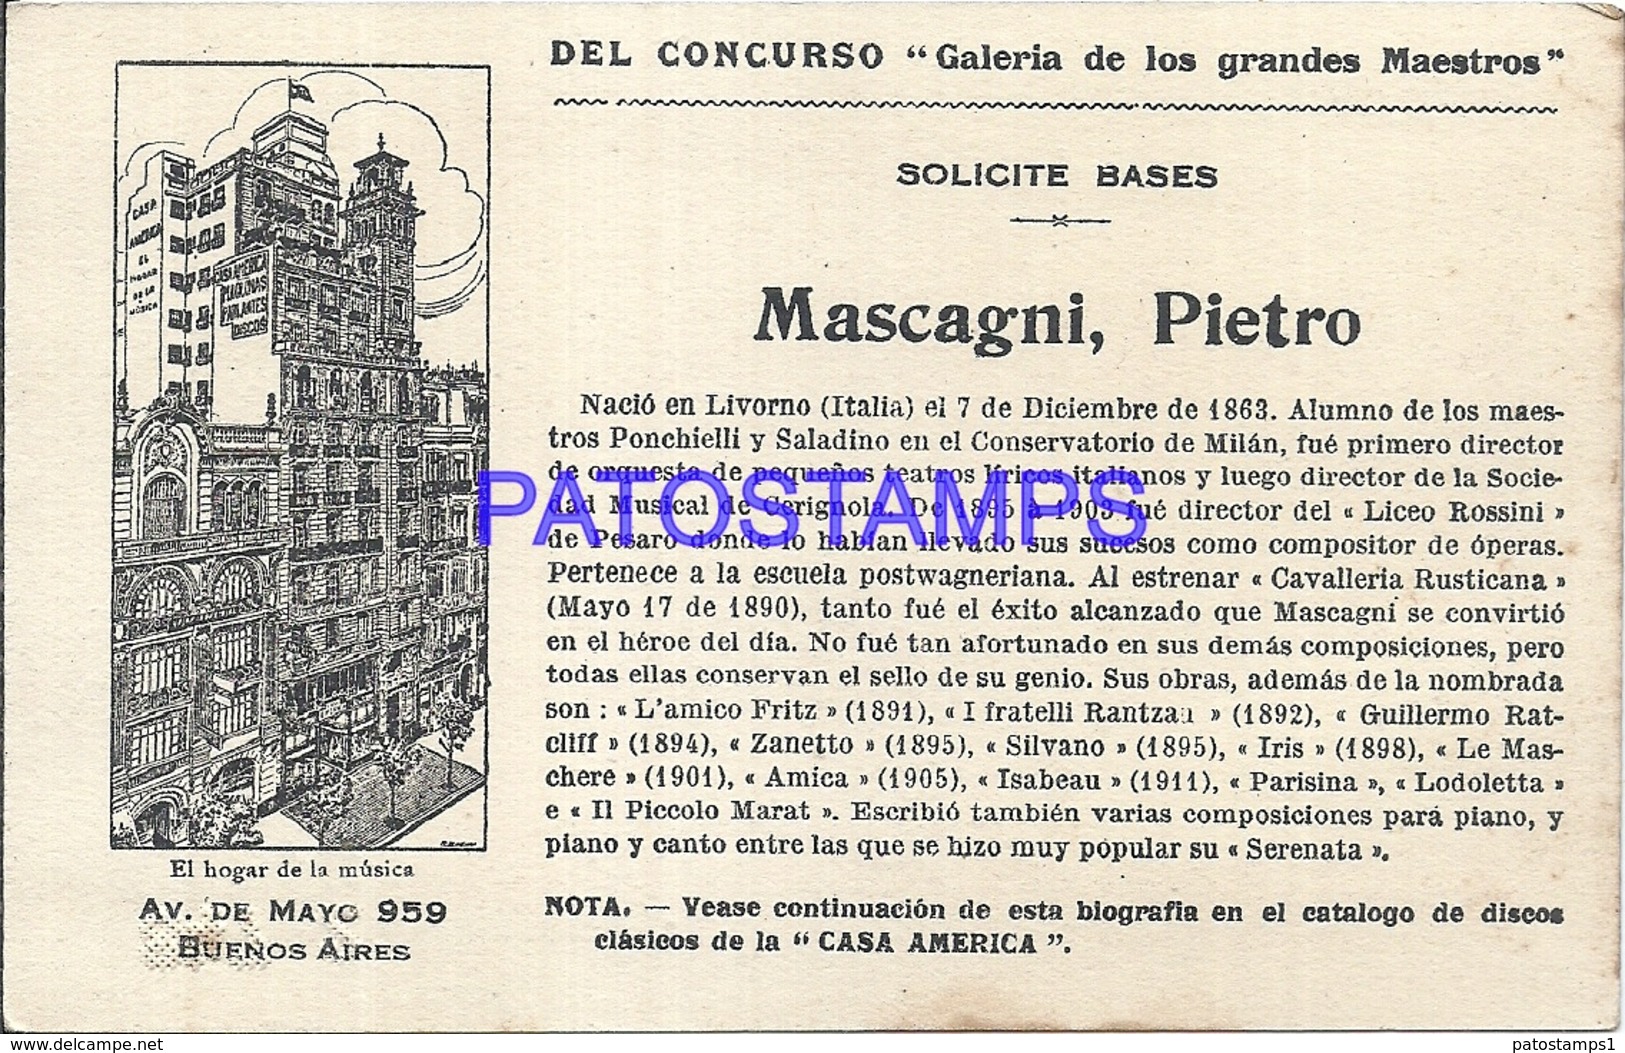 91002 PUBLICTY COMMERCIAL CASA AMERICA EL HOGAR DE LA MUSICA BS AS ARTIST MASCAGNI PIETRO LIRICO NO POSTAL POSTCARD - Reclame